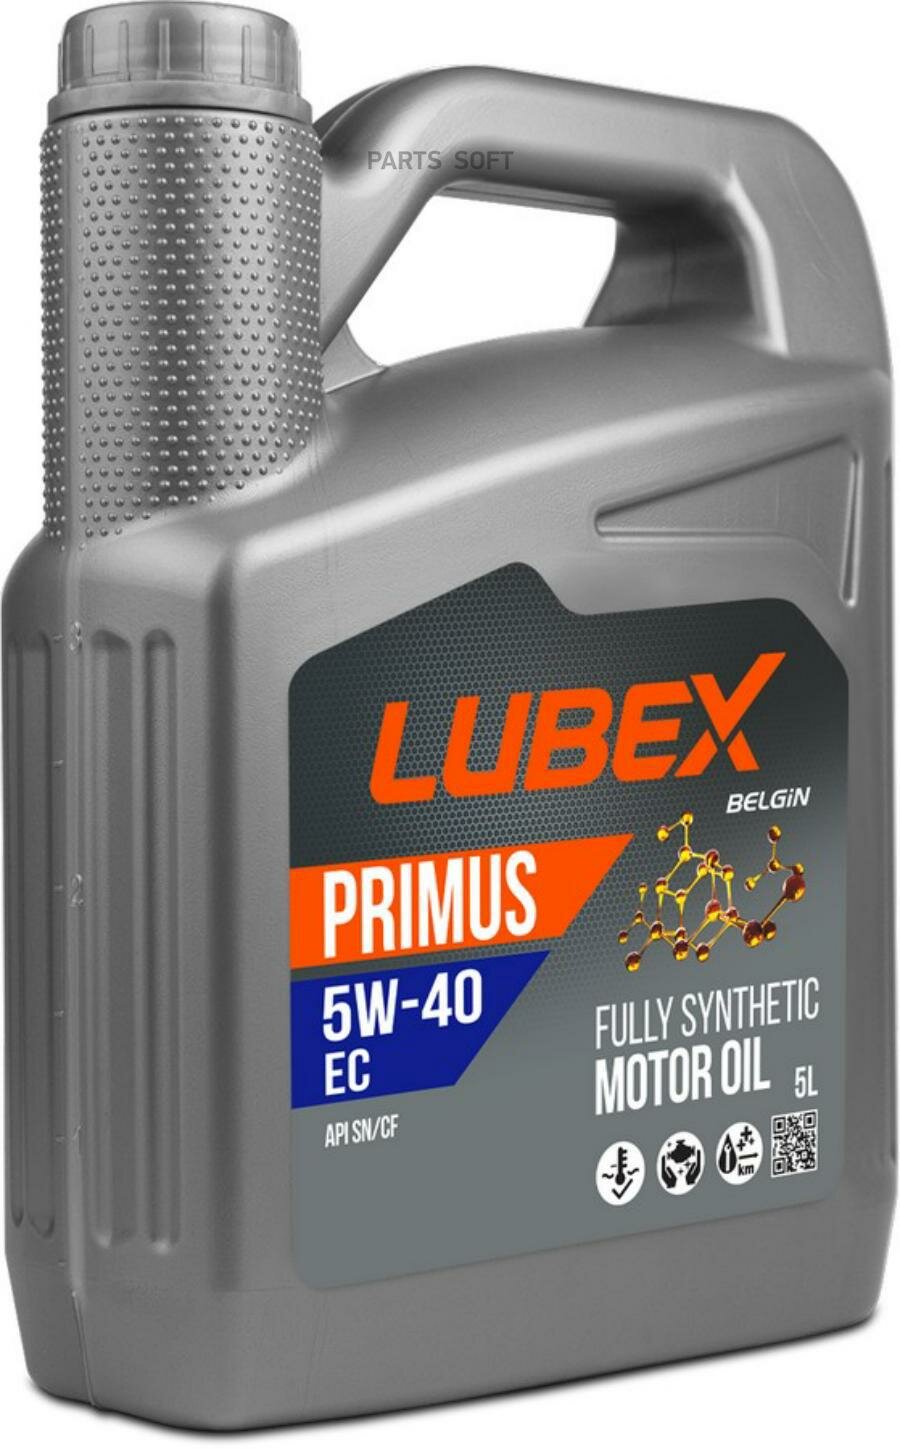 Lubex primus ec 5w40 (5l)_масло моторное! синт.\api cf/sn